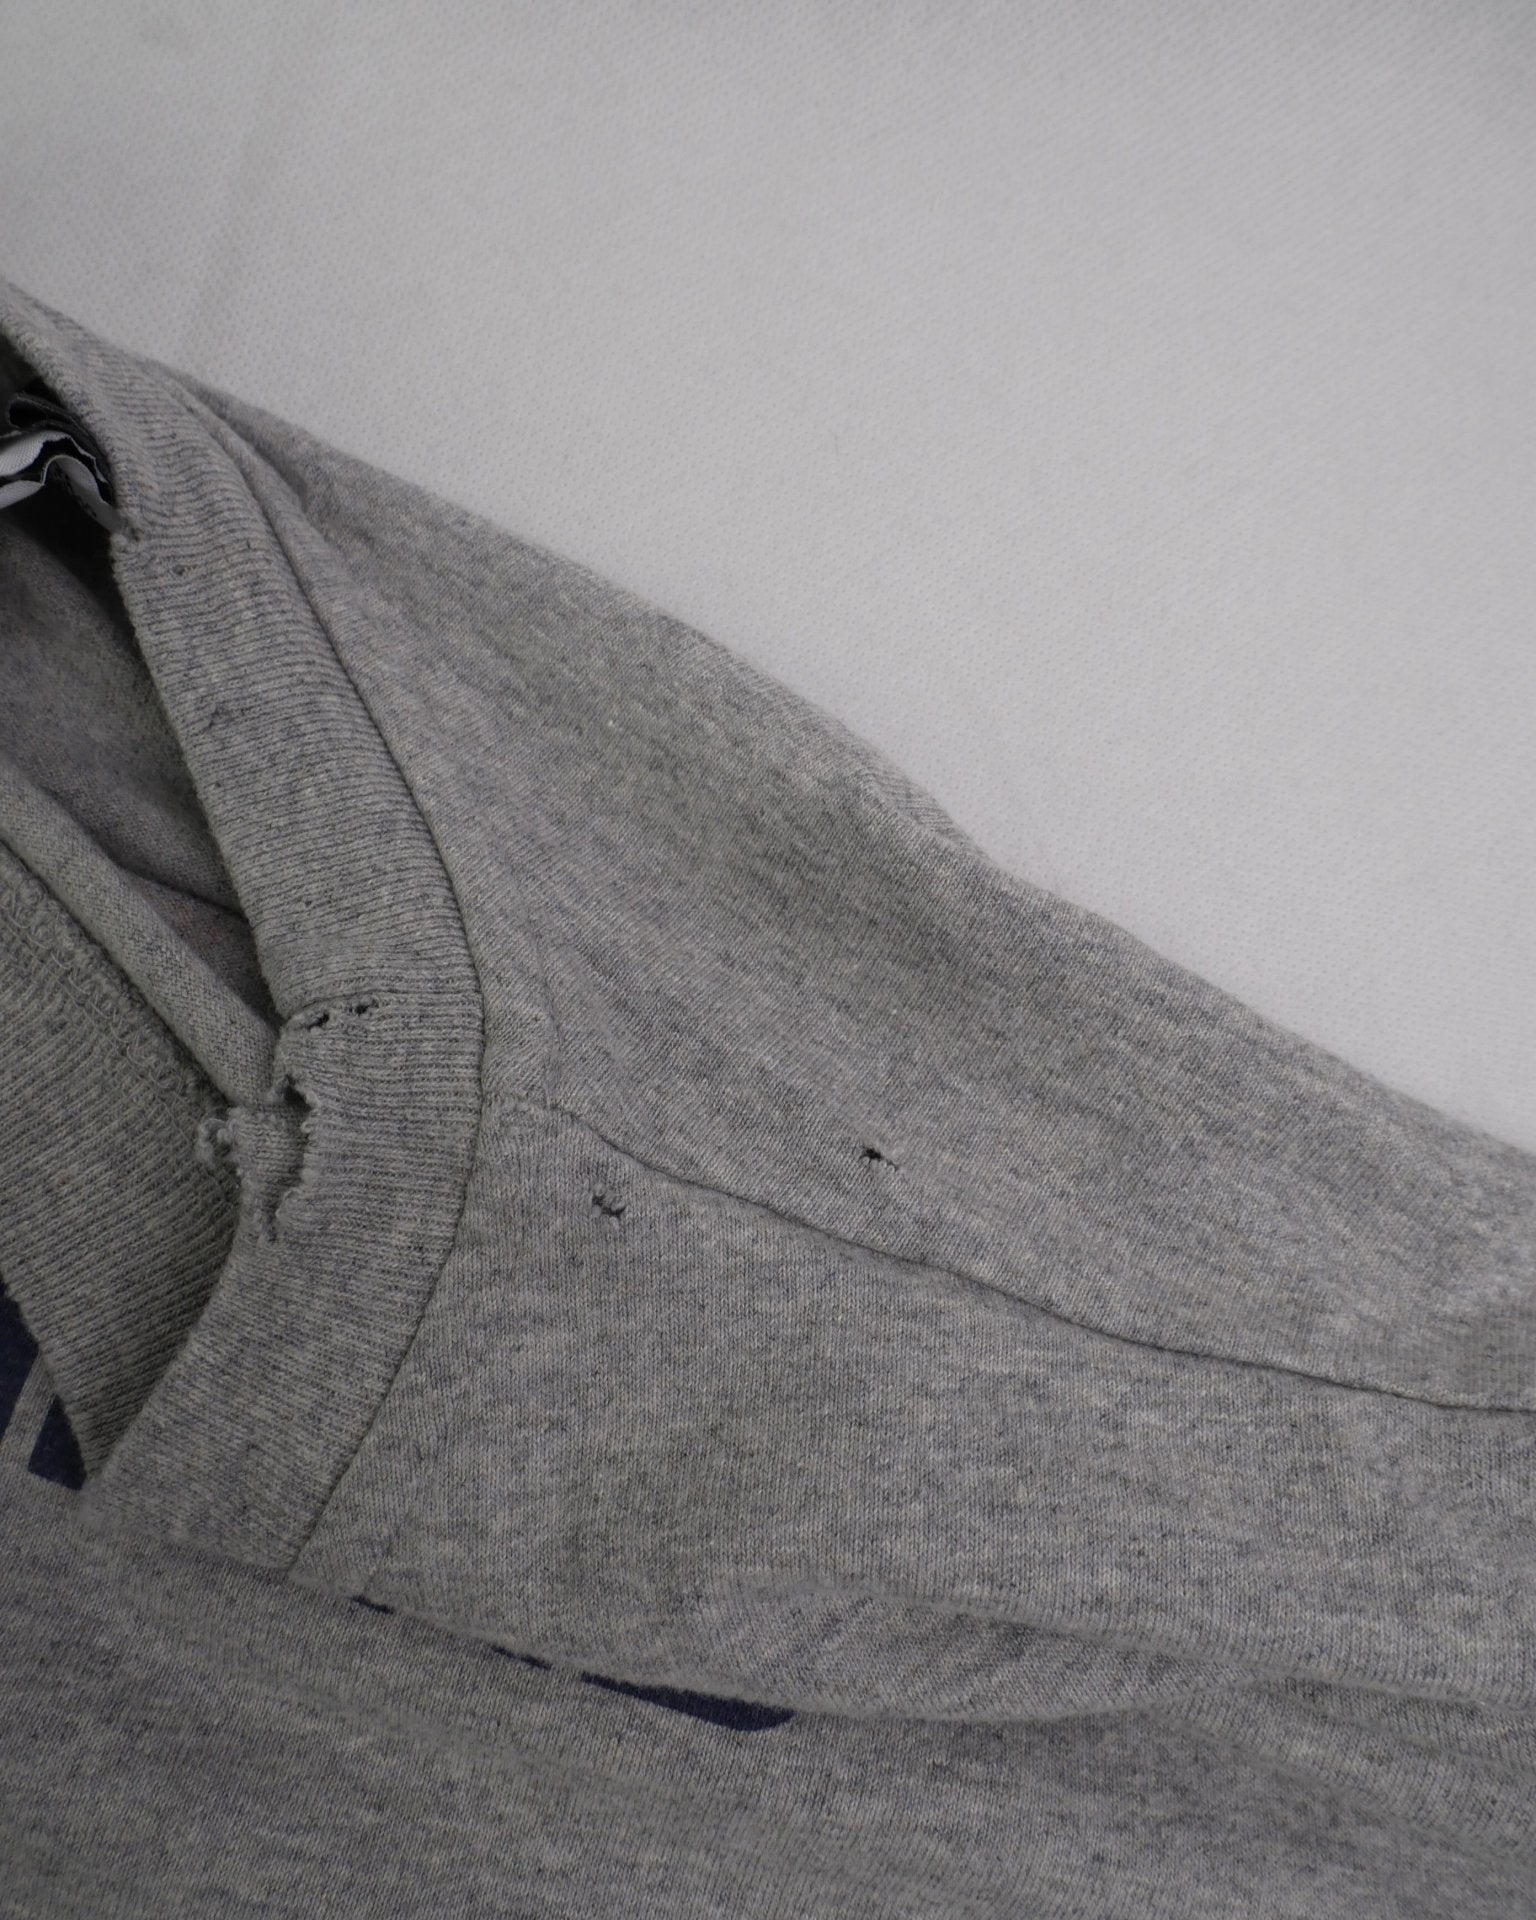 Adidas Property of Warriors printed Spellout grey Shirt - Peeces